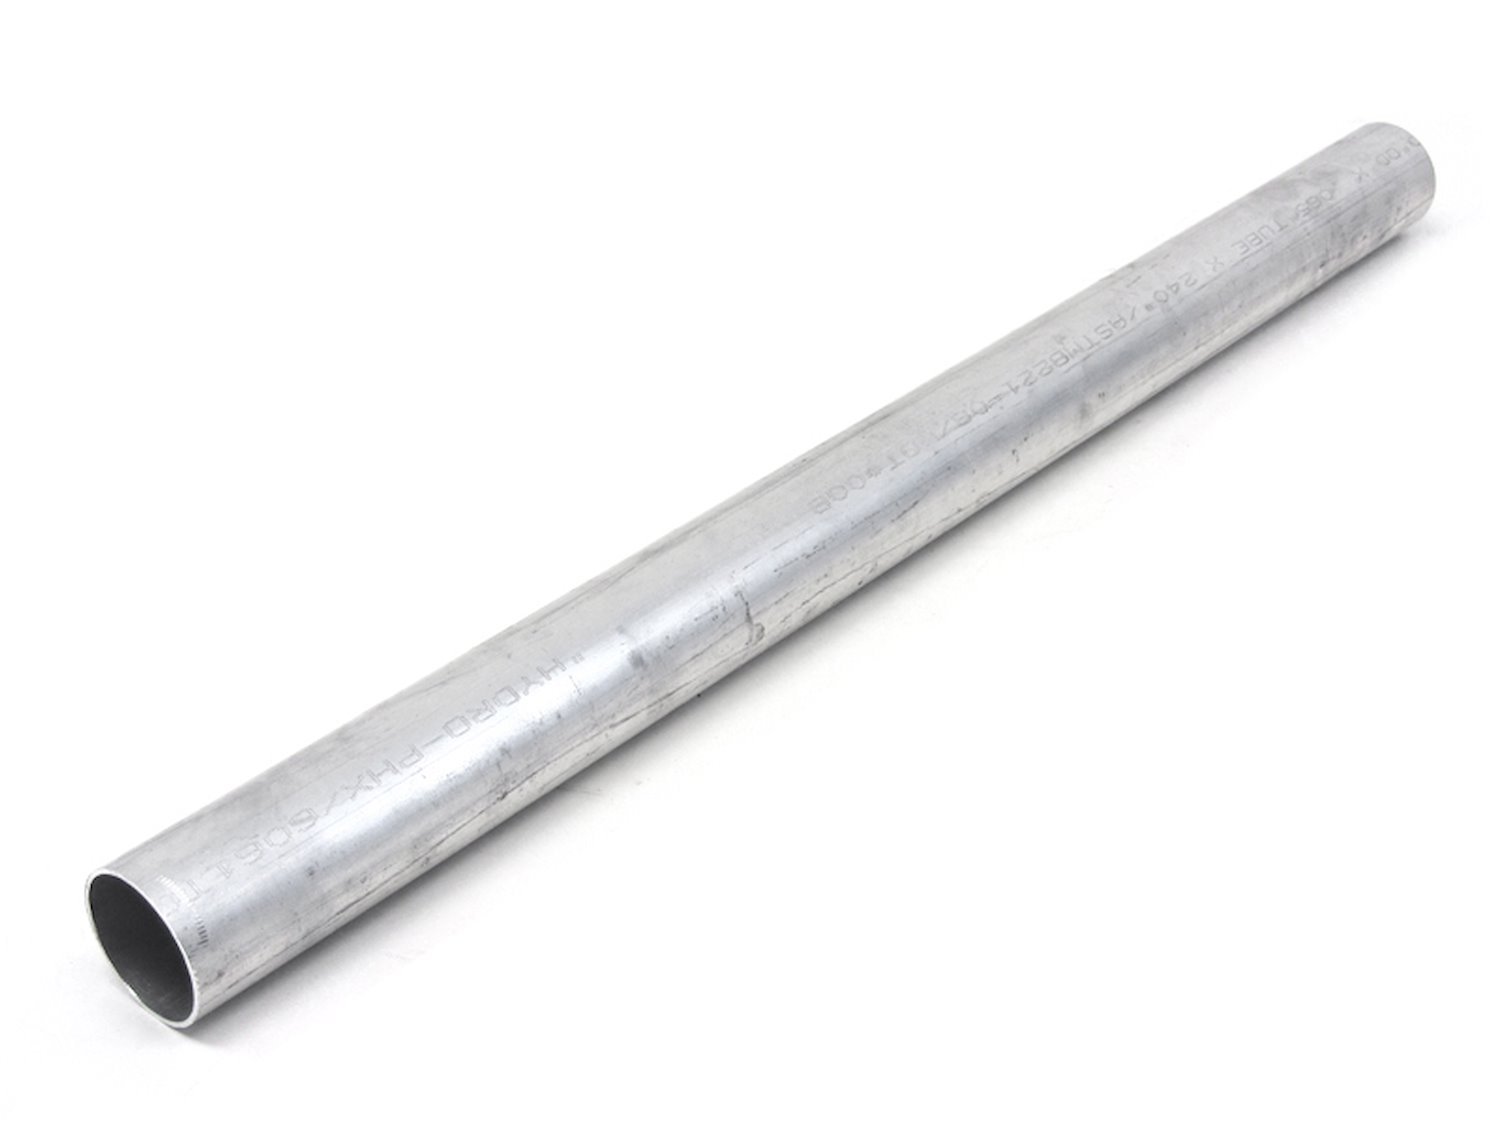 AST-3F-075 Aluminum Tubing, 6061 Aluminum, Straight Tubing, 3/4 in. OD, Seamless, Raw Finish, 3 ft. Long